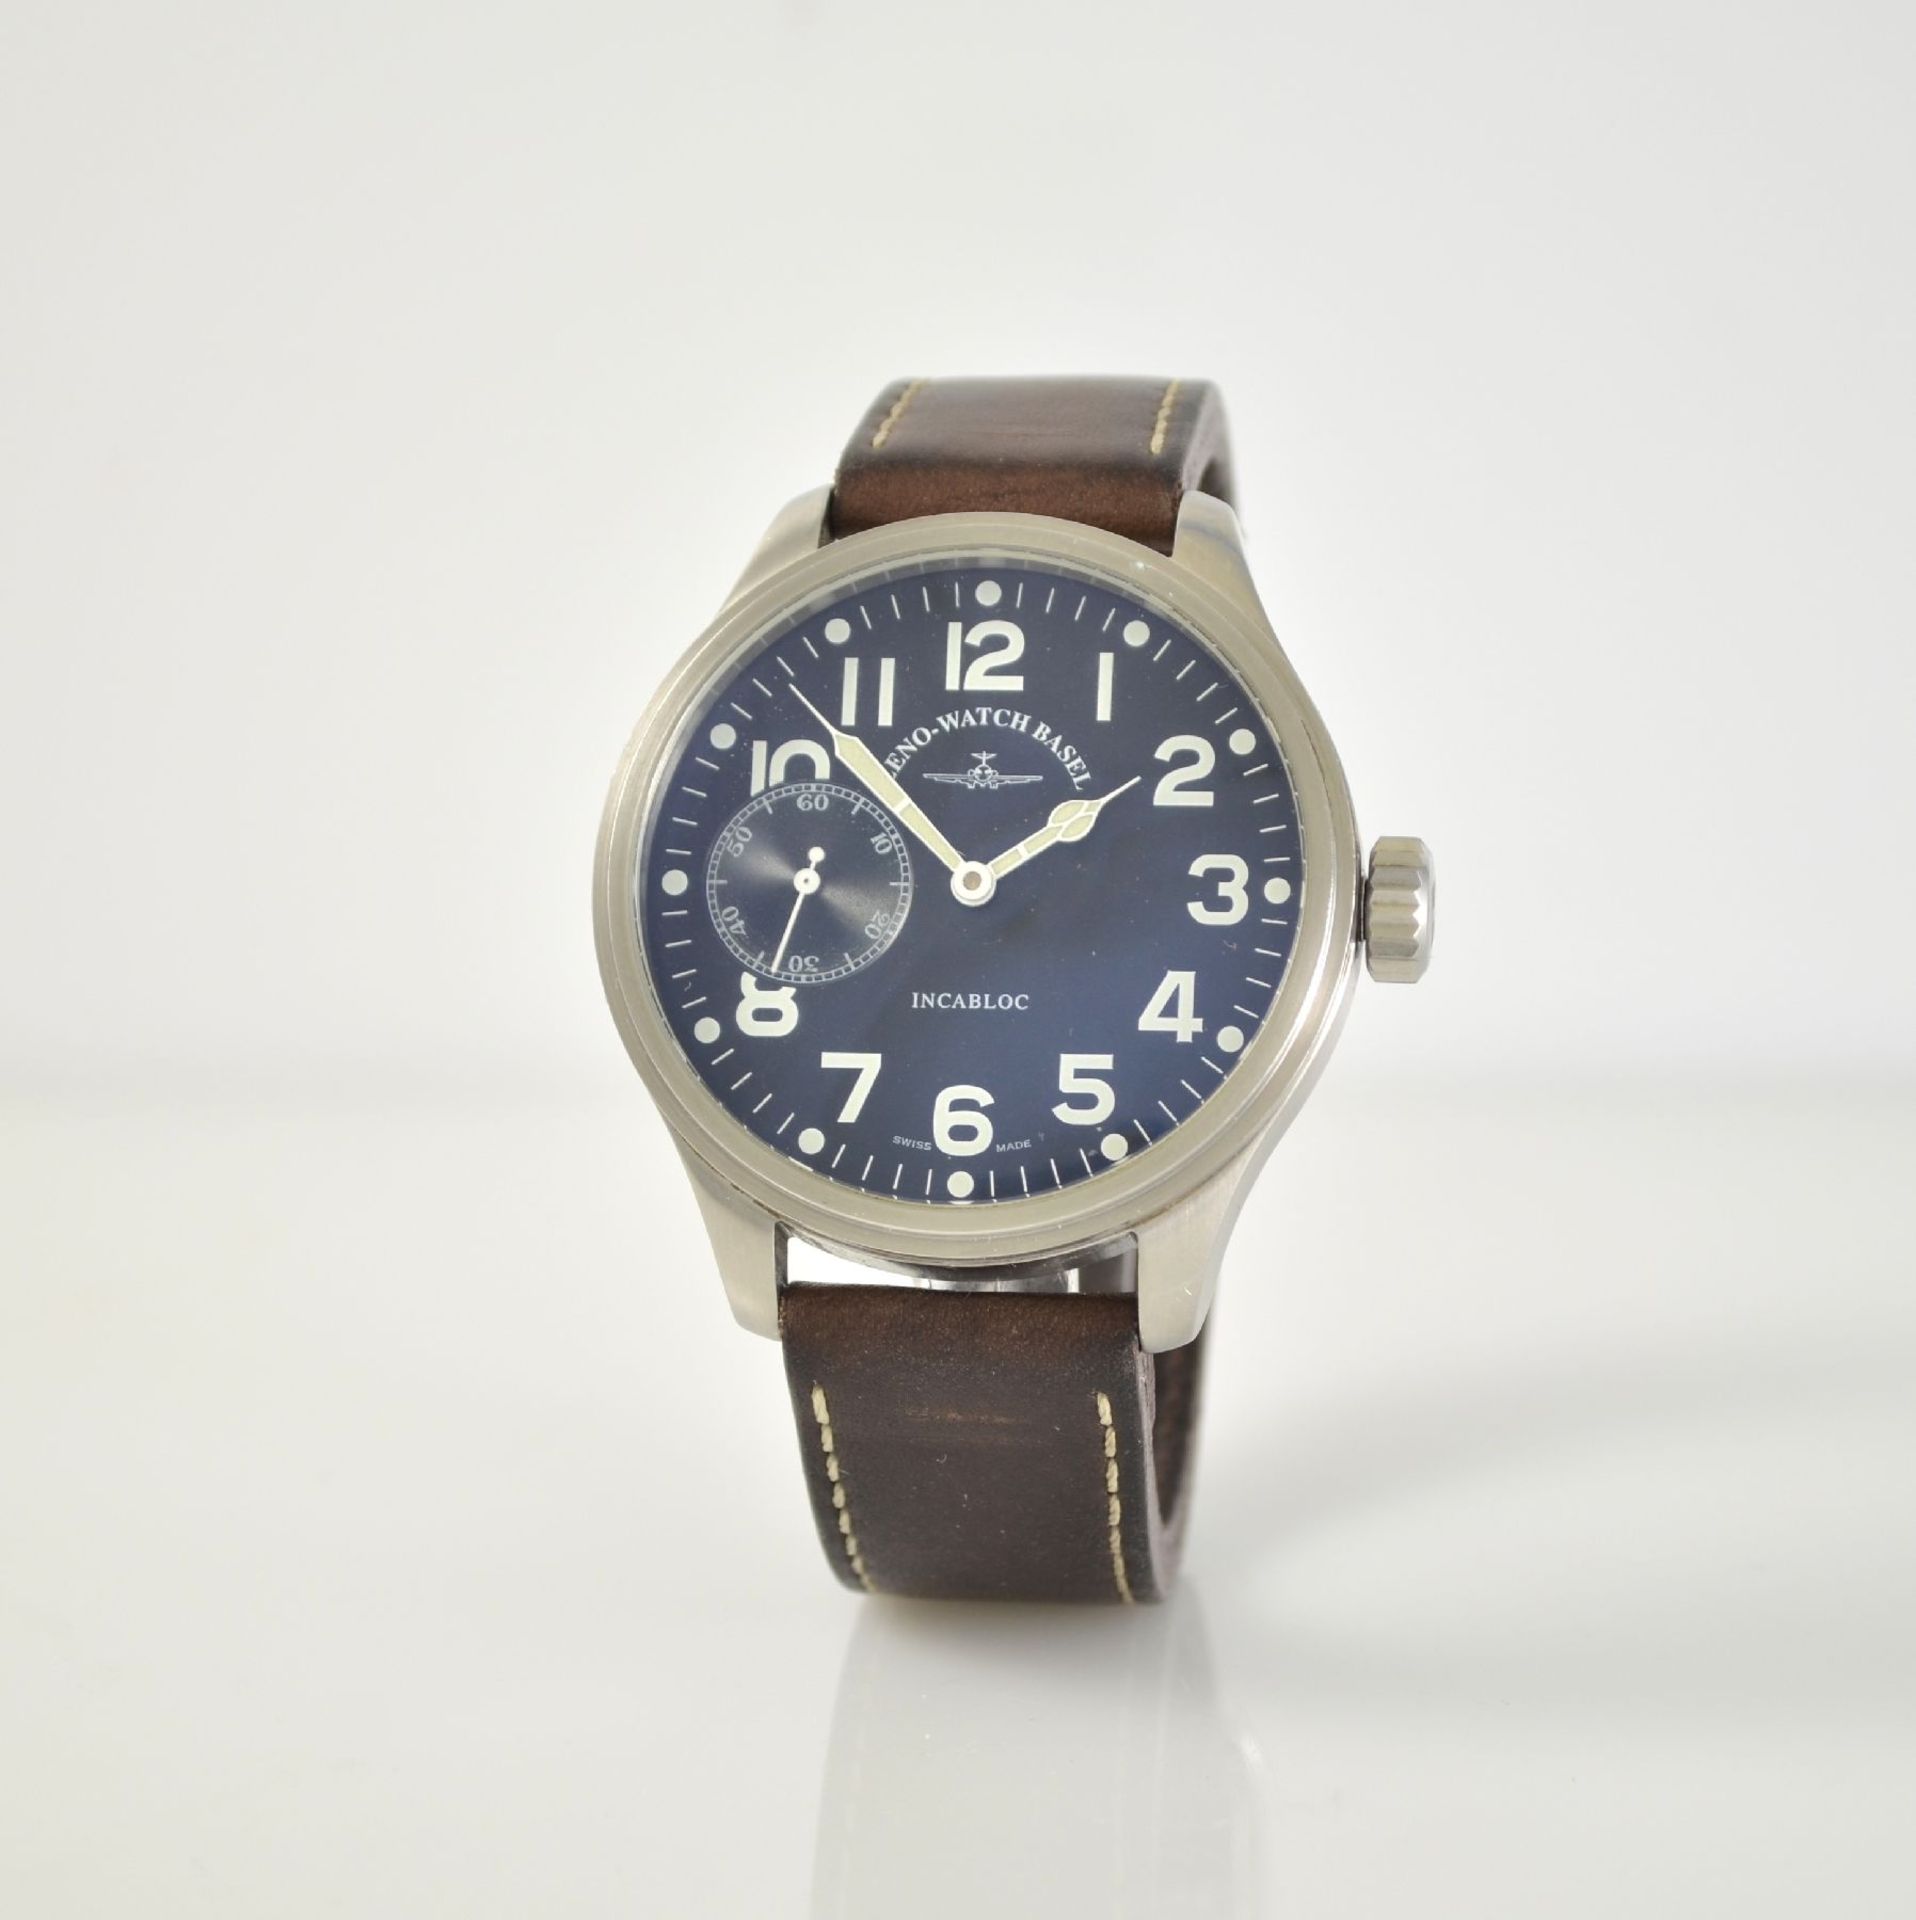 ZENO-WATCH BASEL Pilot big gents wristwatch, Switzerland sold in May 2006 according to warranty - Bild 3 aus 7